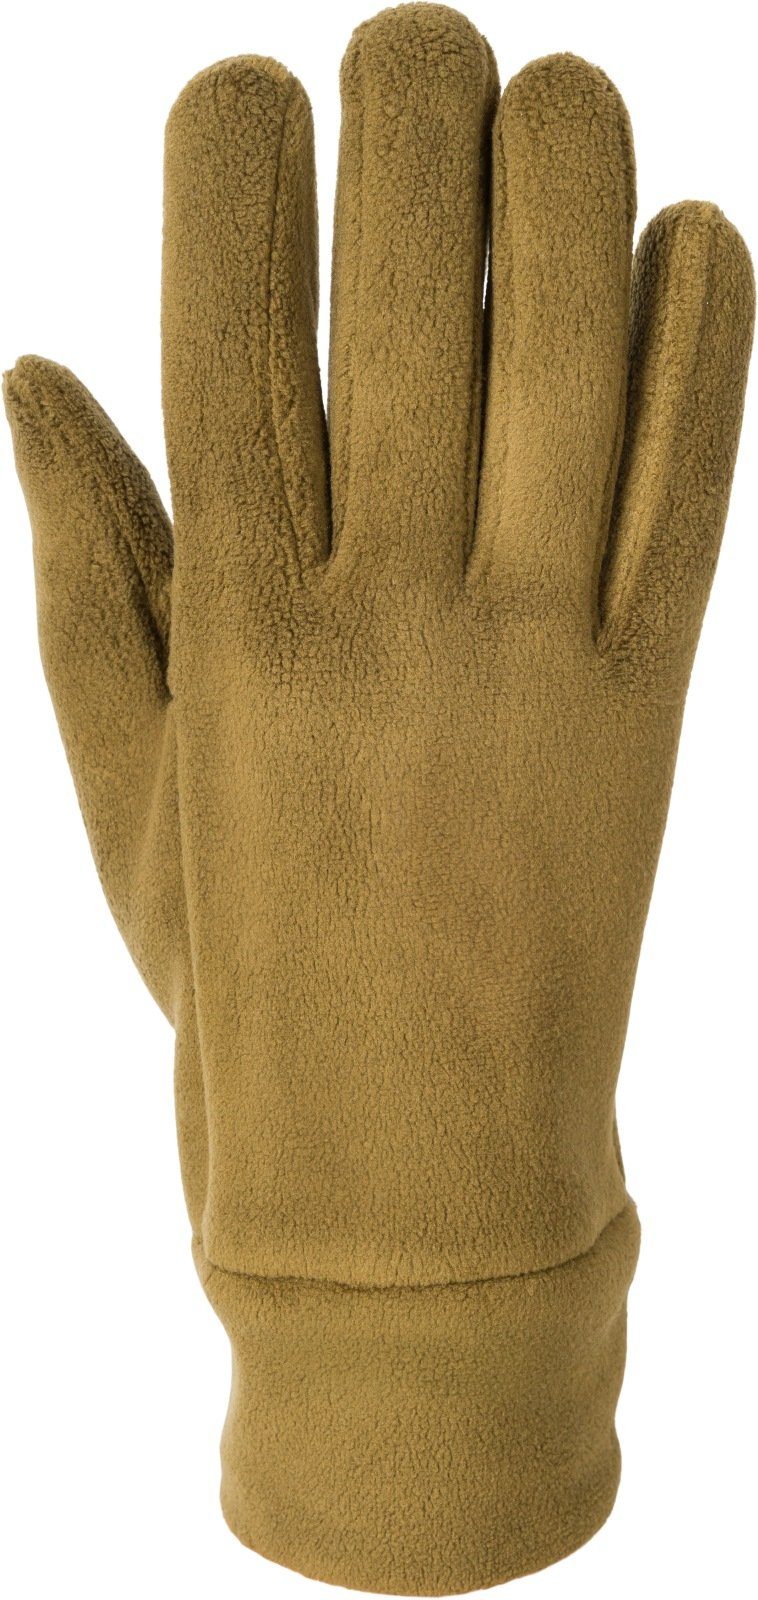 styleBREAKER Fleece Oliv Handschuhe Touchscreen Fleecehandschuhe Einfarbige